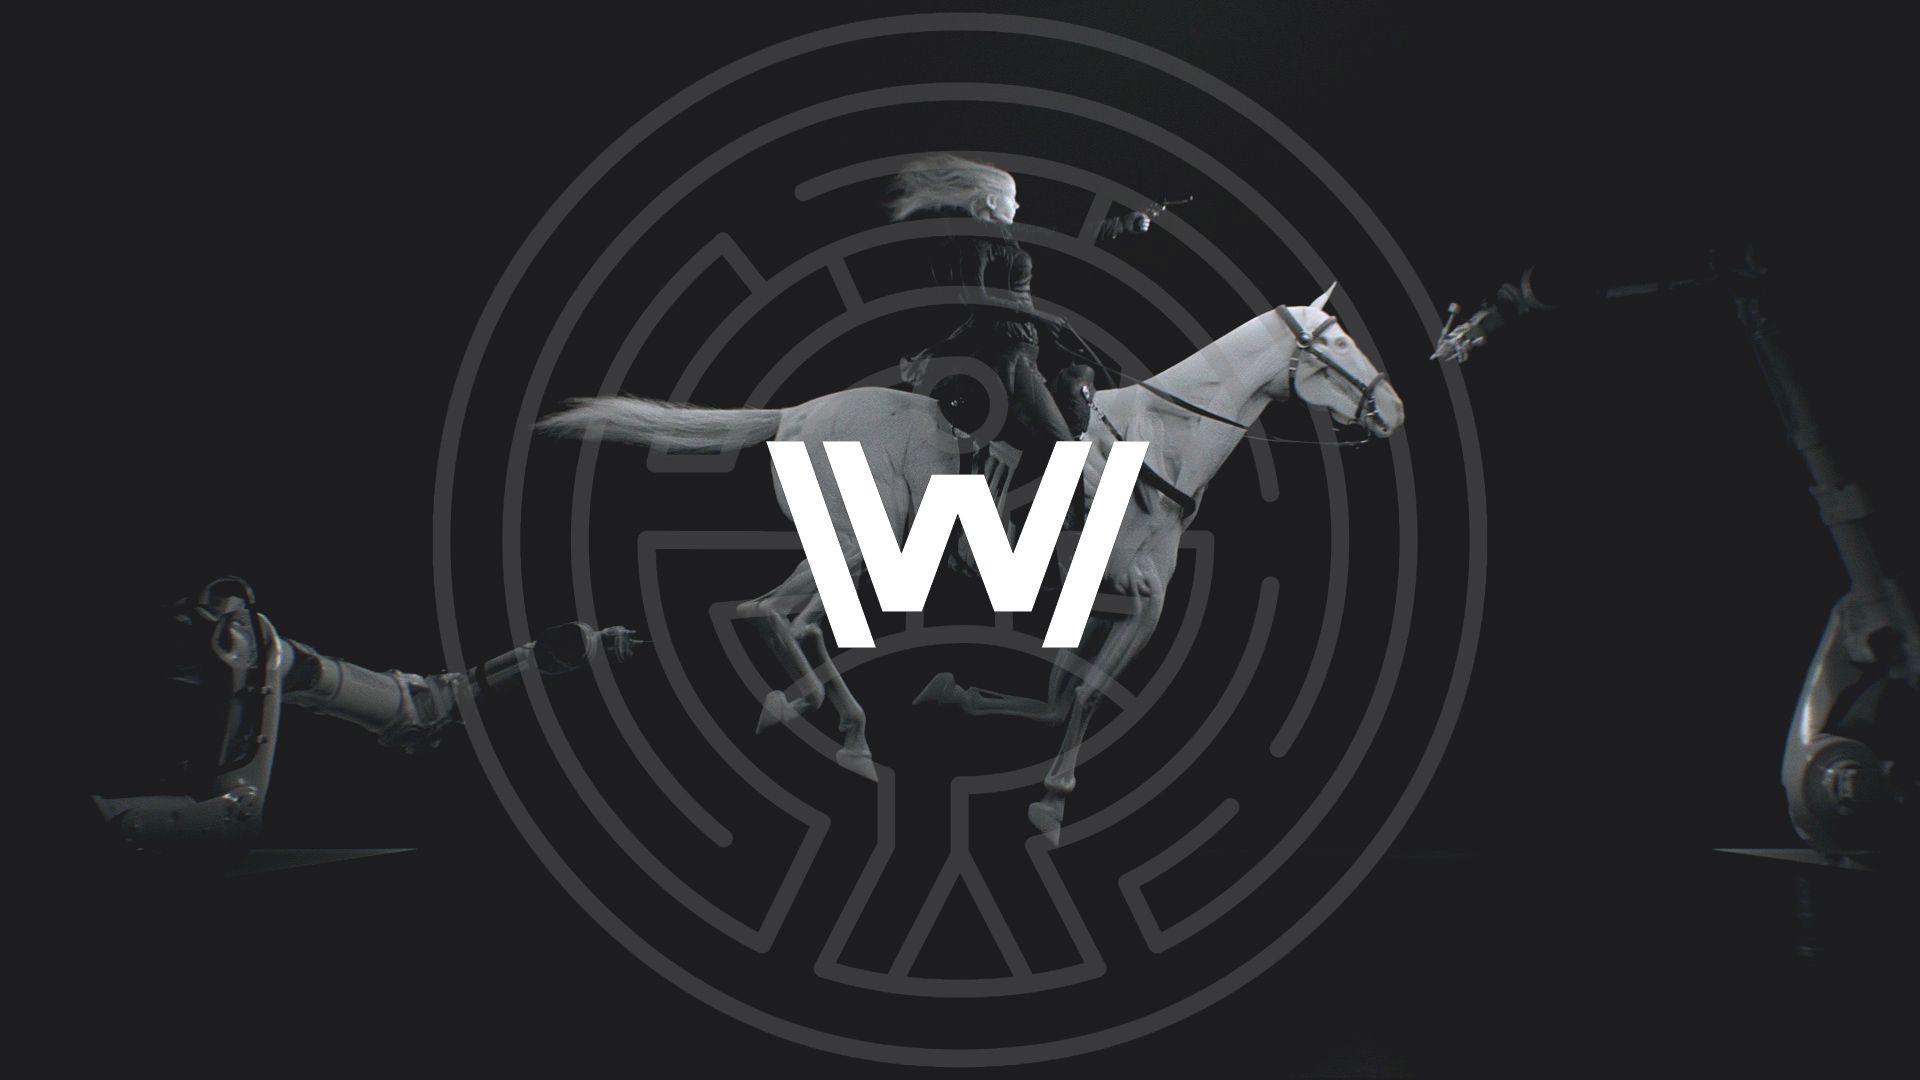 Made a simple Westworld wallpapers [Desktop 1920x1080] : westworld